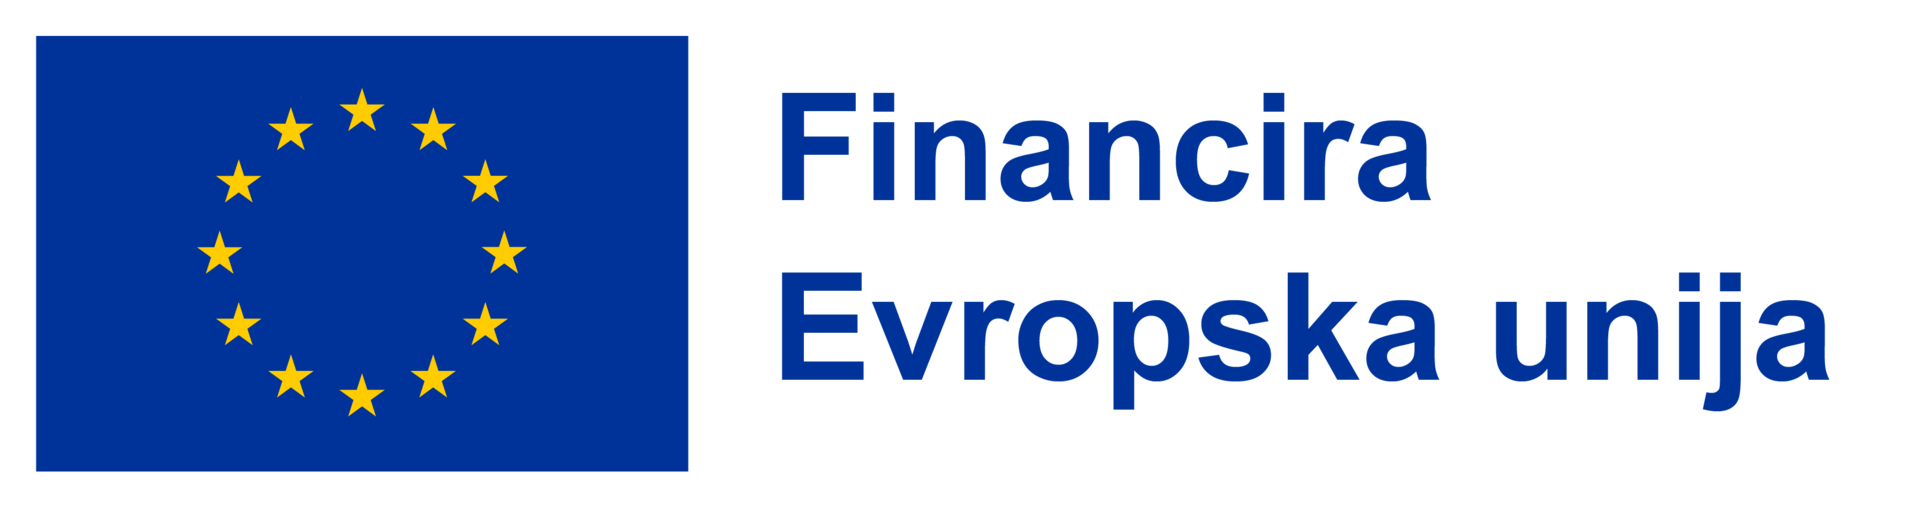 Logotip Financira Evropska unija